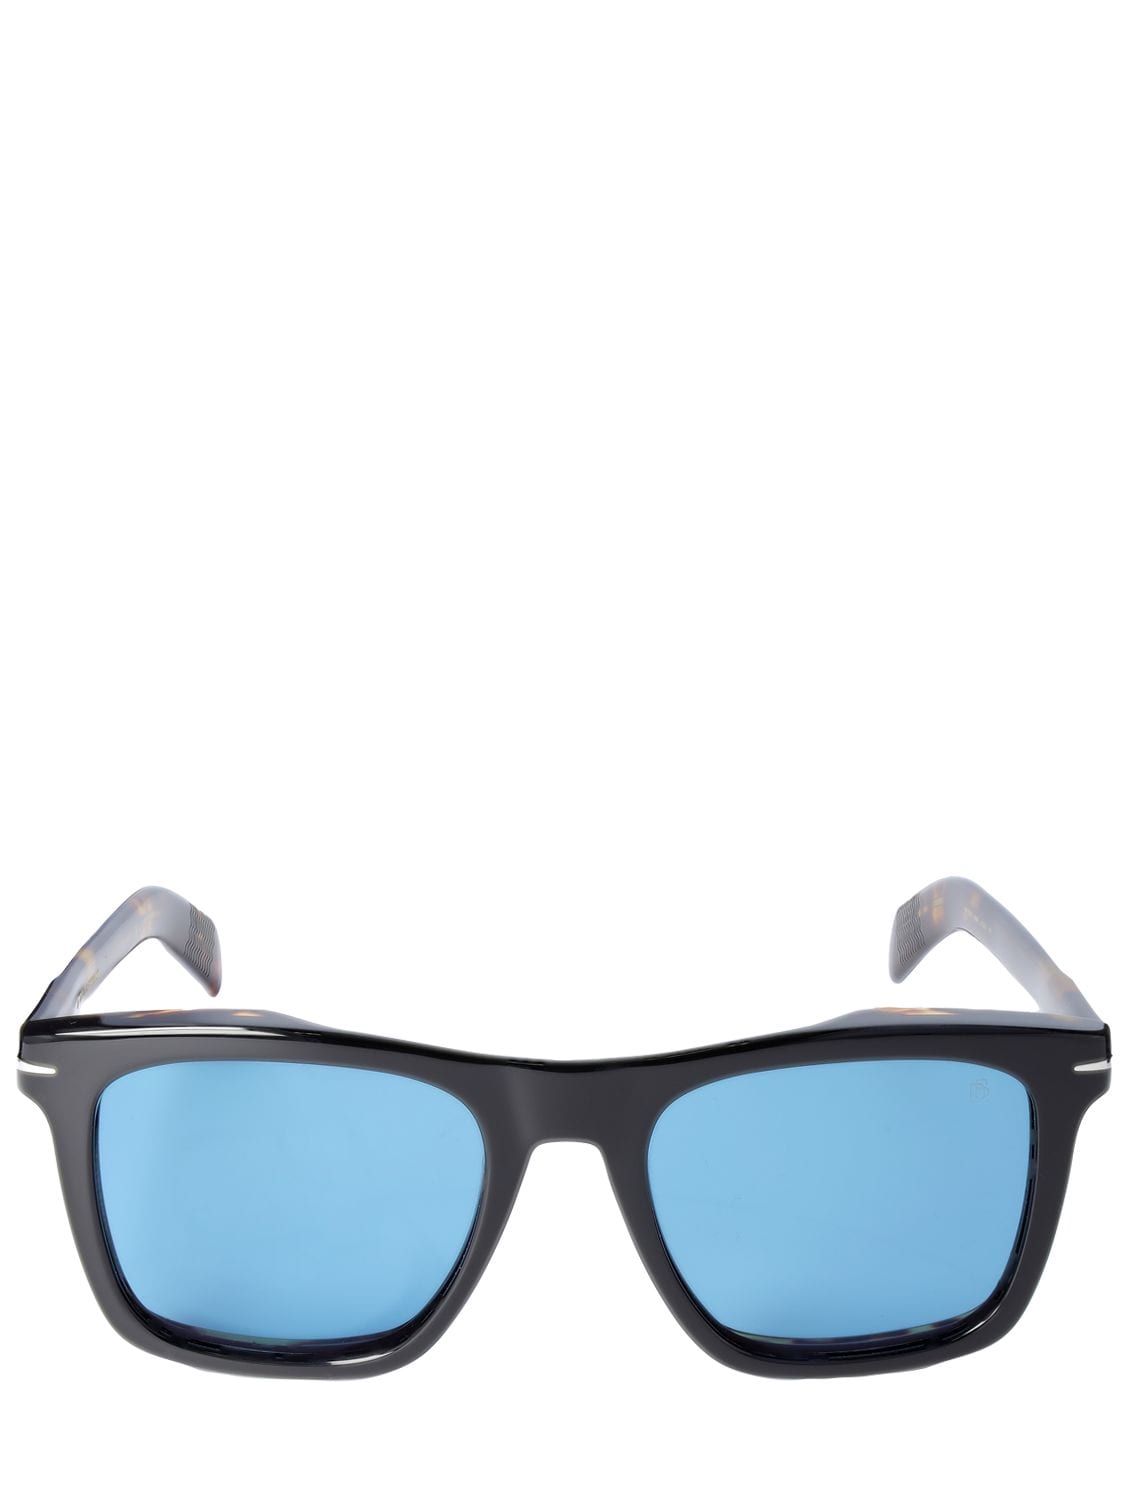 Db Eyewear By David Beckham - Db squared acetate sunglasses - Multi ...